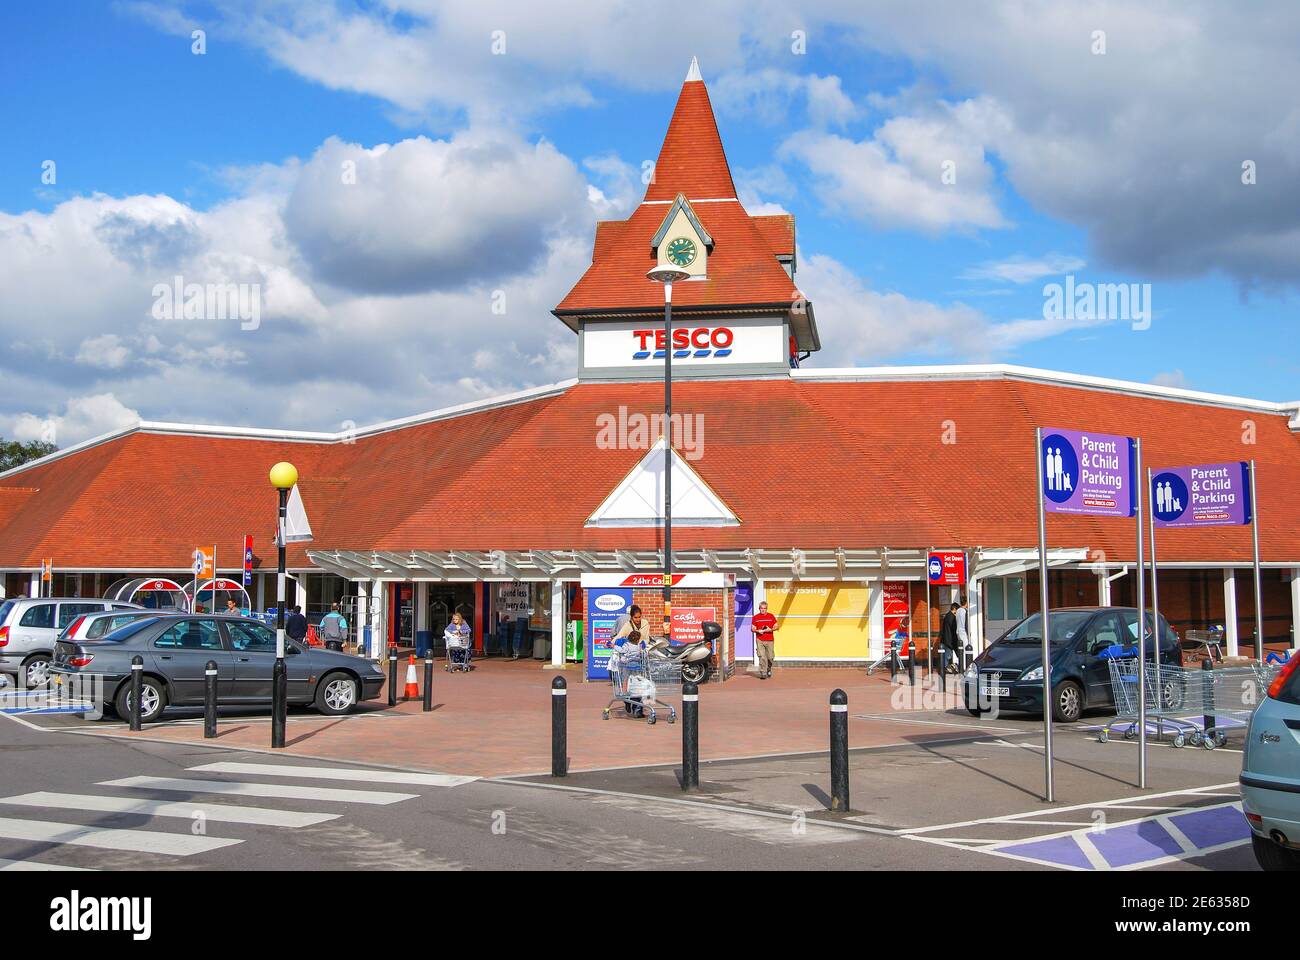 Tesco Superstore supermarket, County Lane, Warfield, Berkshire, England, United Kingdom Stock Photo